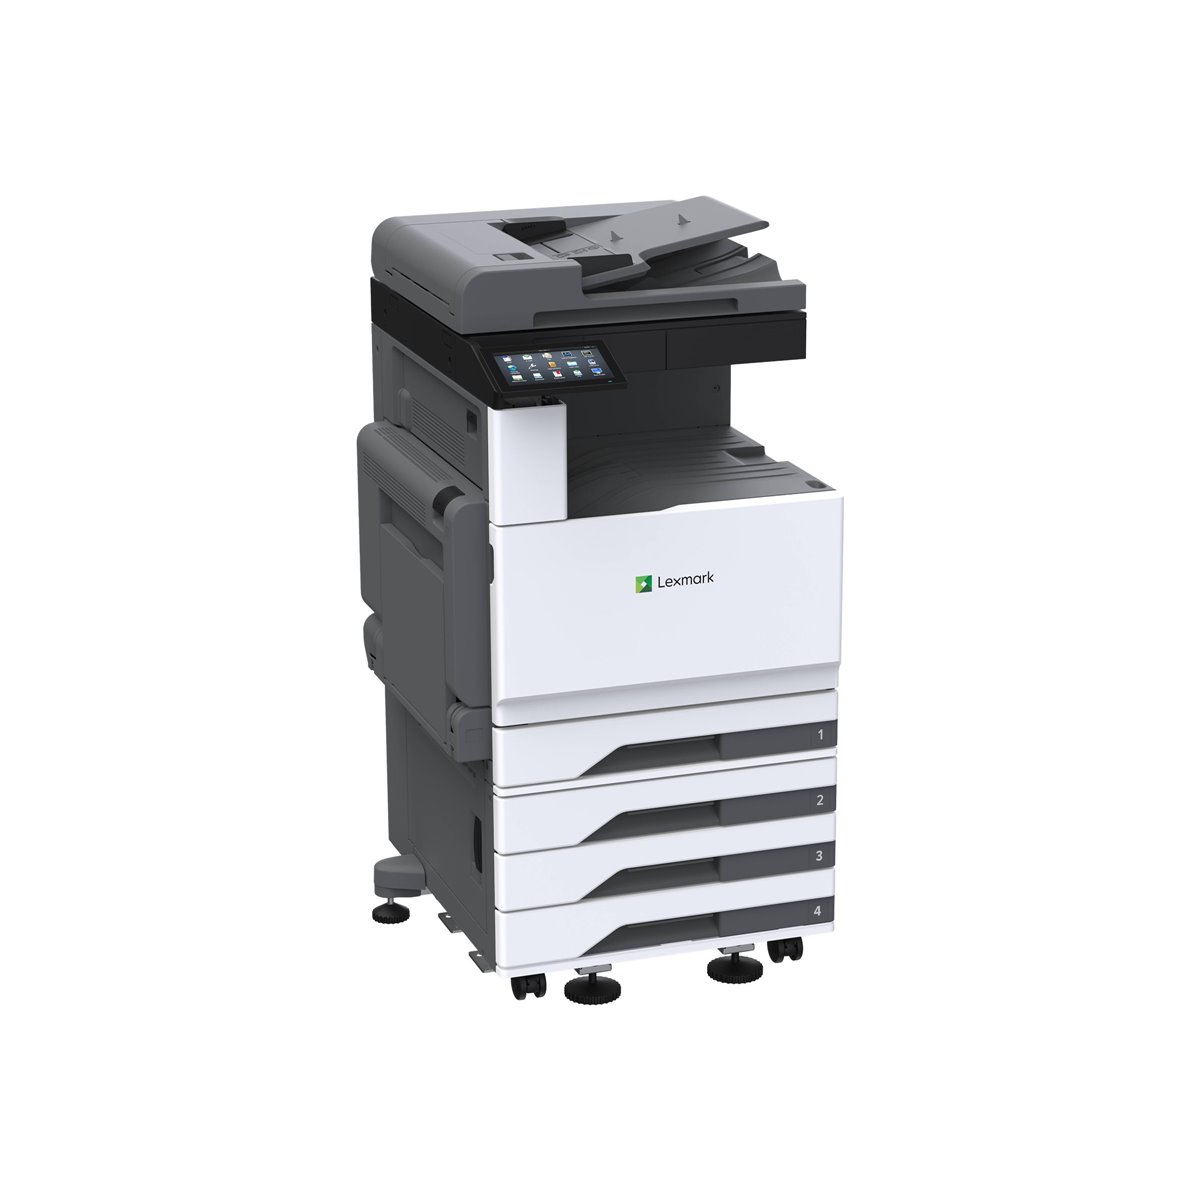 Lexmark CX931dtse - Multifunktionsdrucker - Farbe - Multifunction Printer - Laser-Led